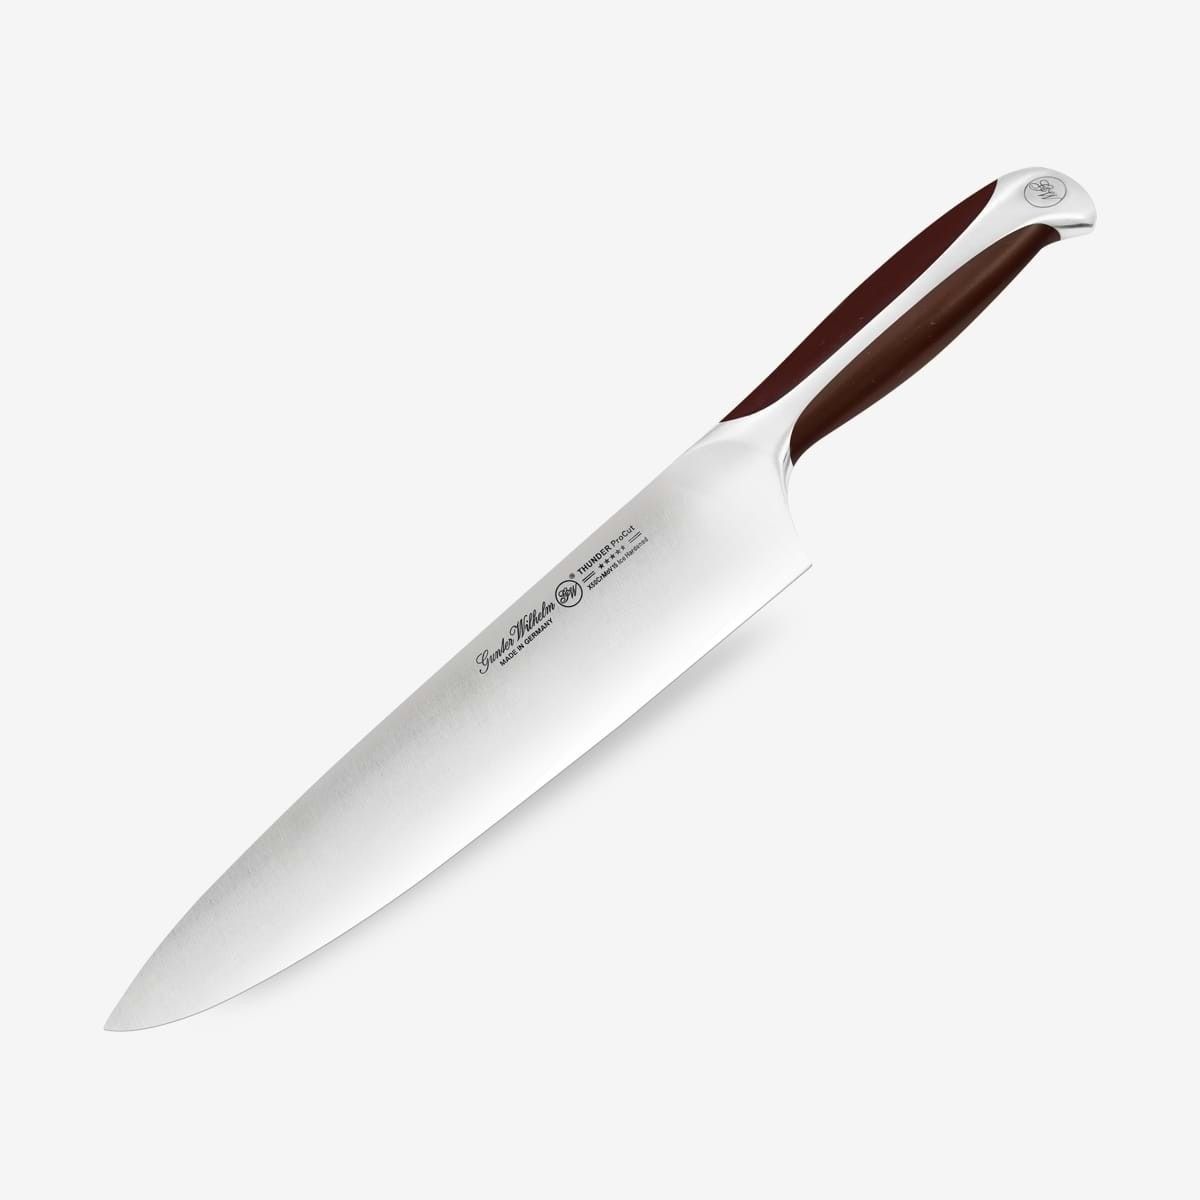 Gunter Wilhelm Thunder Chef Knife, 10 Inch | Brownish ABS Handle SKU: 50-505-0110